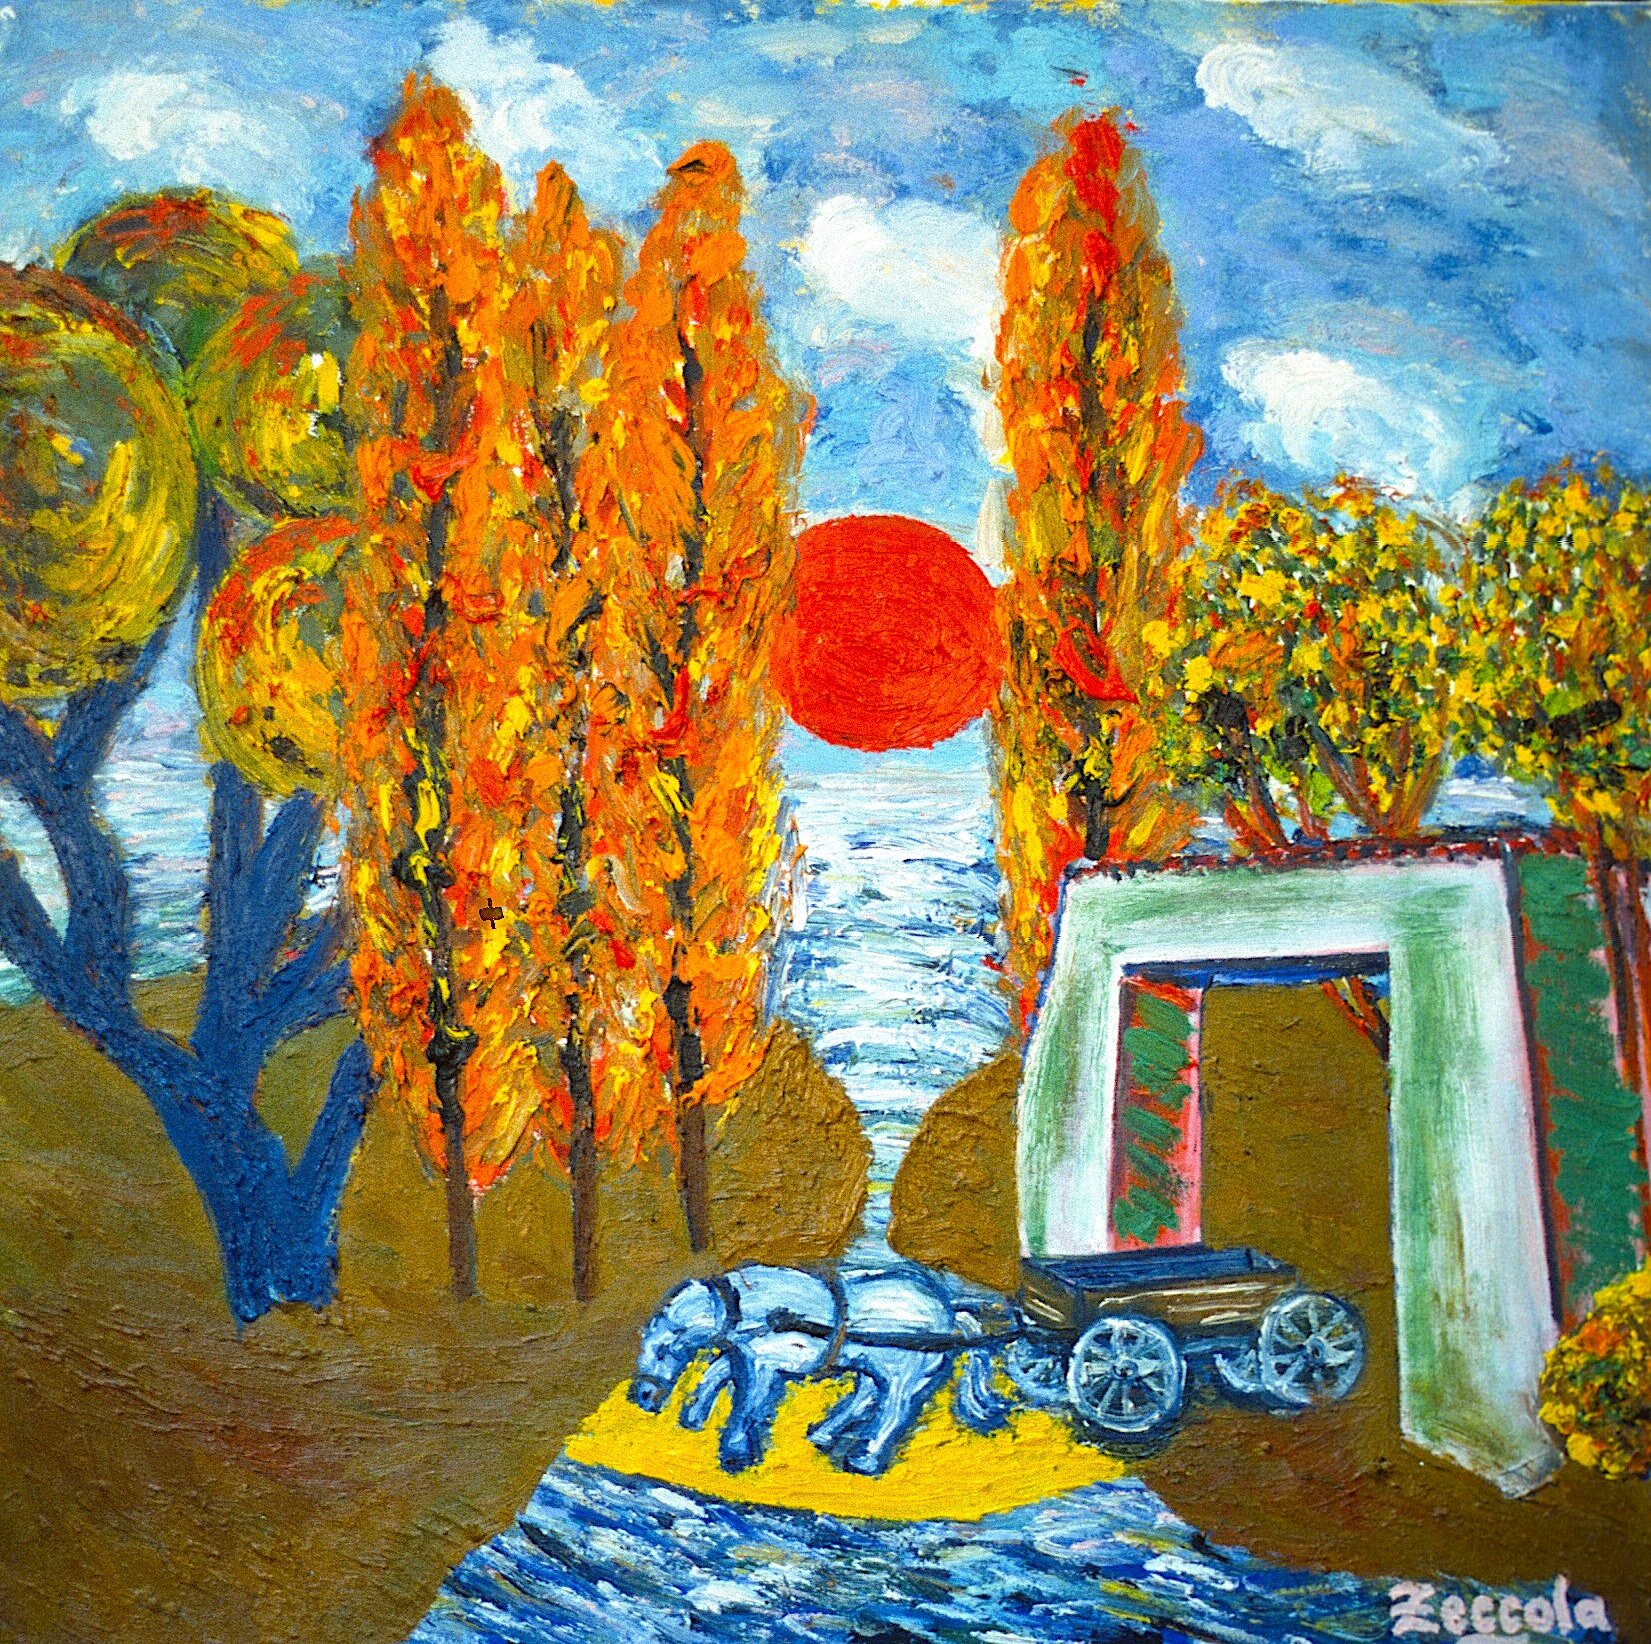 Tesuque Road, 2000. Oil, acrylic on canvas. 30” x 30”.